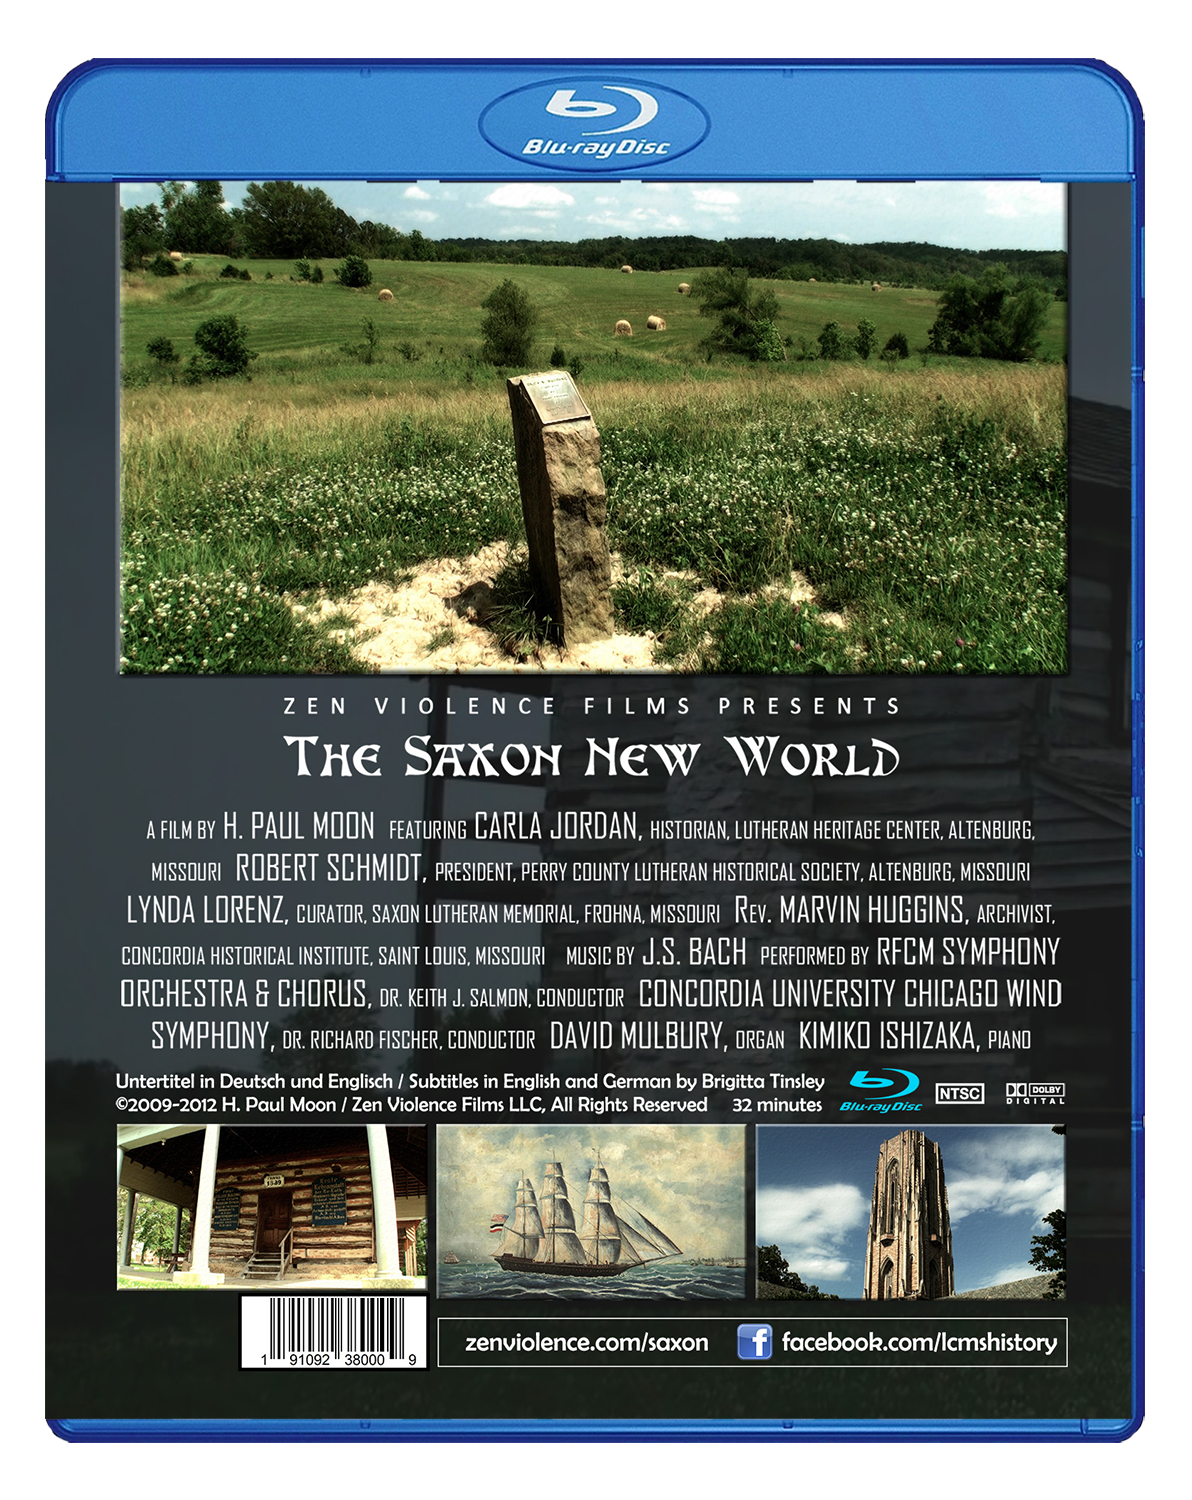 The Saxon New World (Blu-ray)